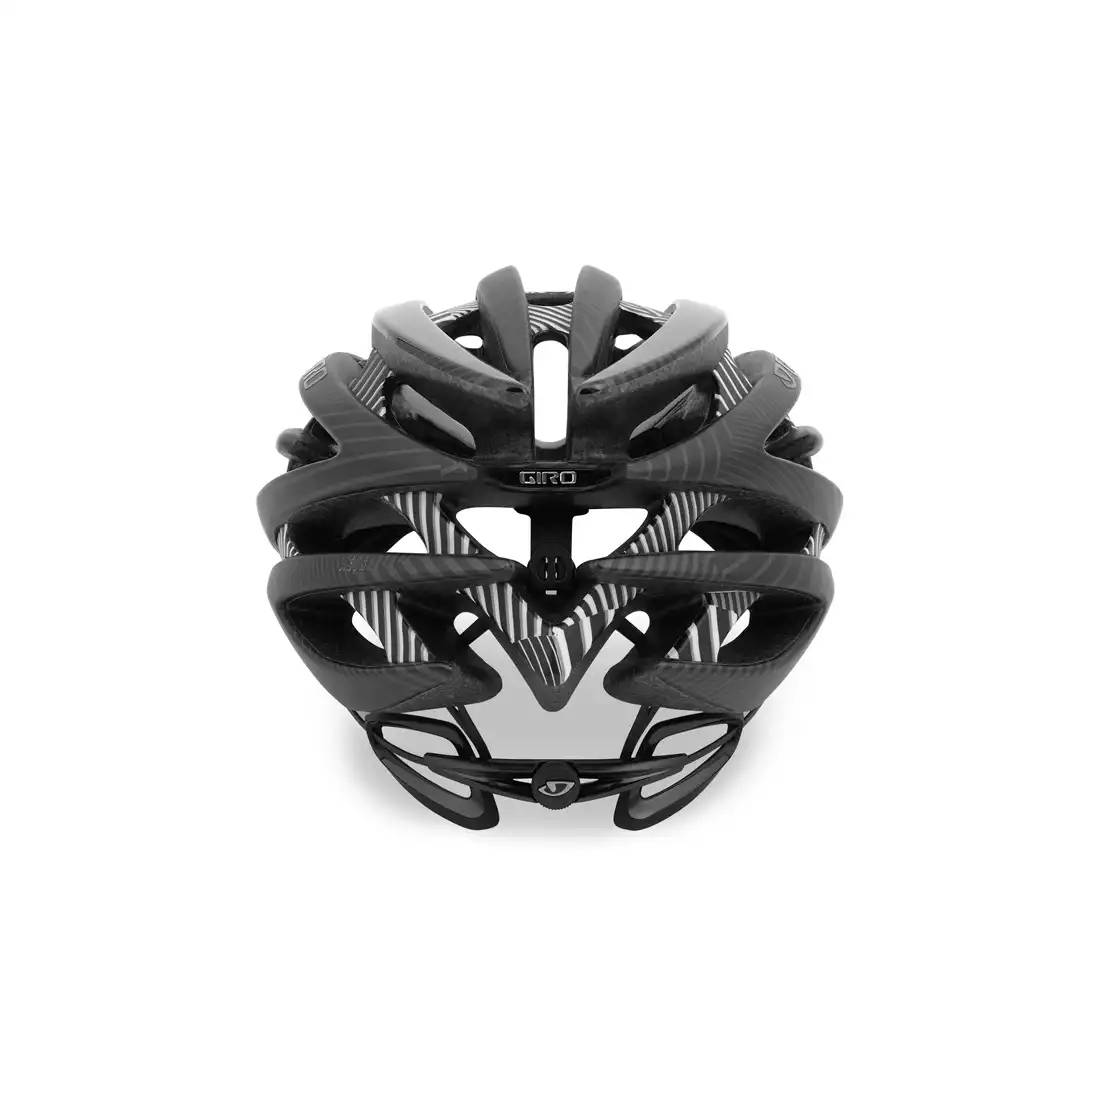 Giro Aeon Bicycle Cycle Bike Helmet Pad Set Black 